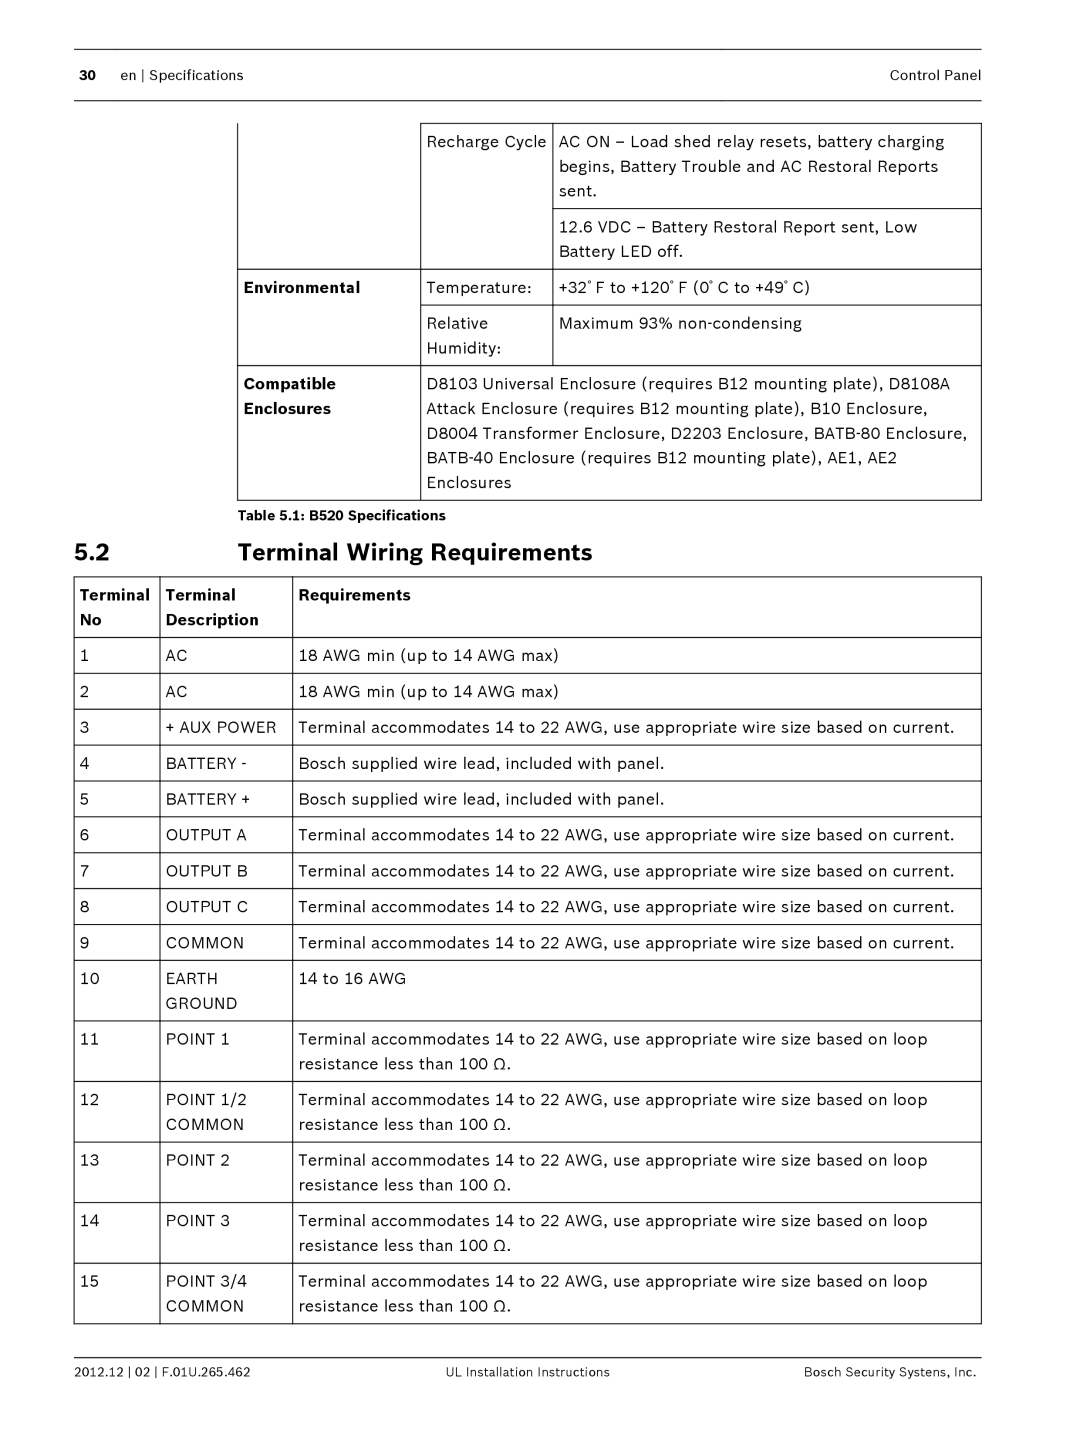 Bosch Appliances D9412GV4 Terminal Wiring Requirements, Environmental, Compatible, Enclosures, Description 